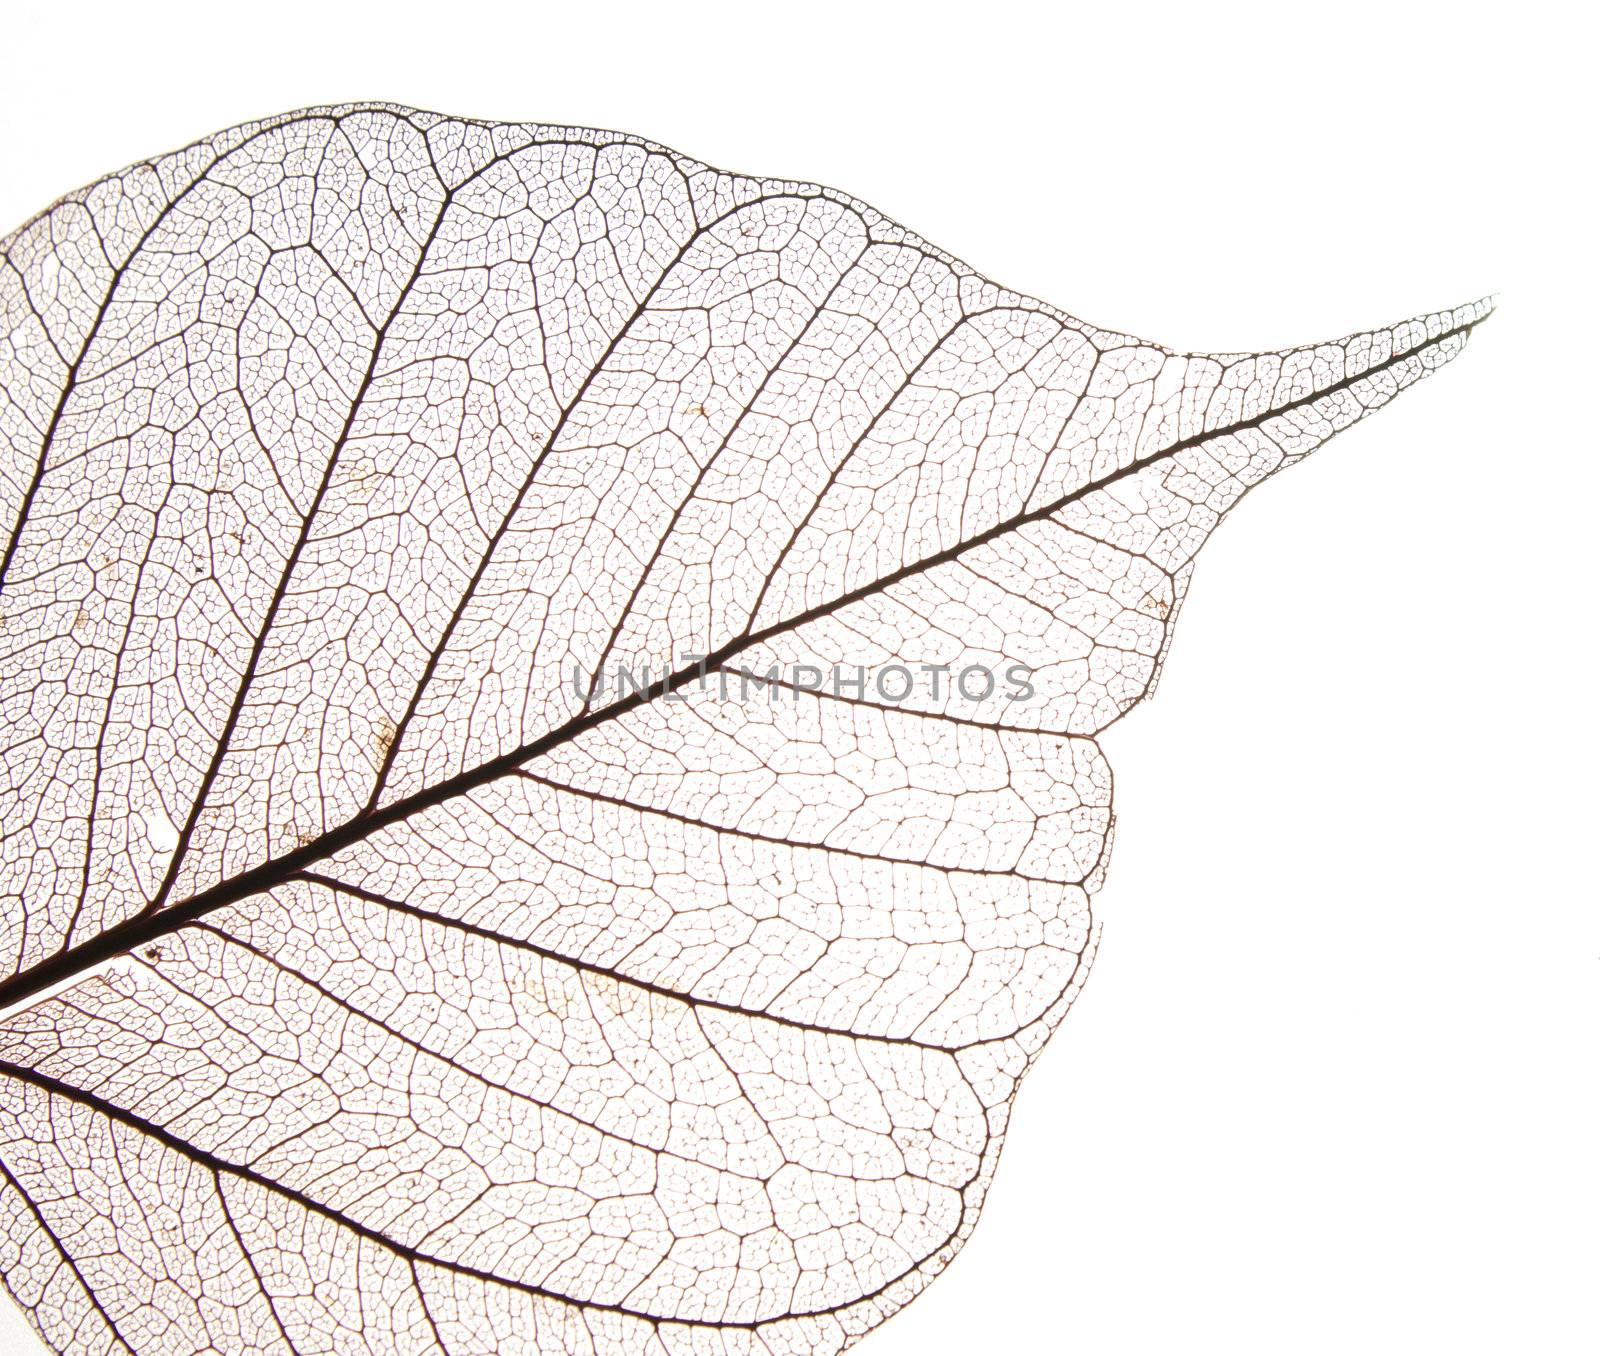 Dry leaf detail texture by Arsen